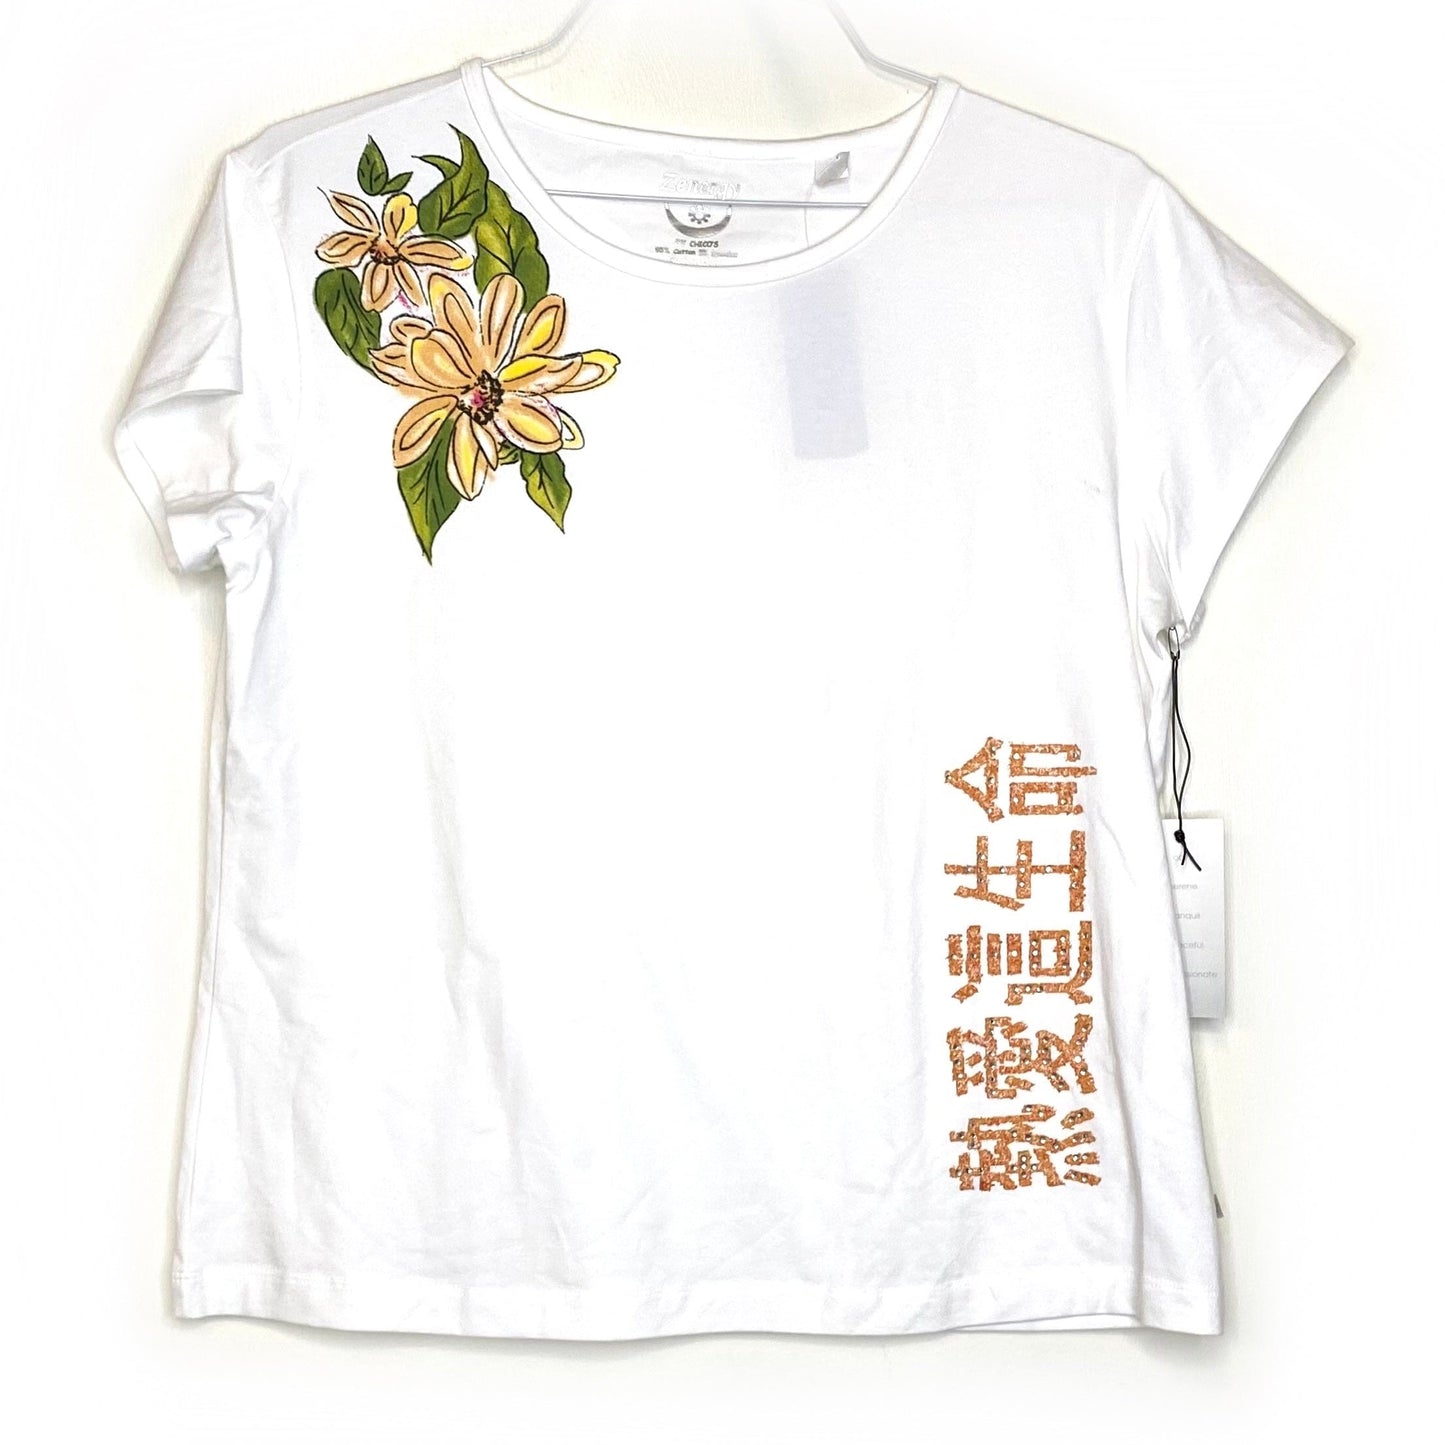 Zenergy Chicos Womens Short Sleeve Top Size 3, White - ‘Asian Bloom Osaka’ - NWT